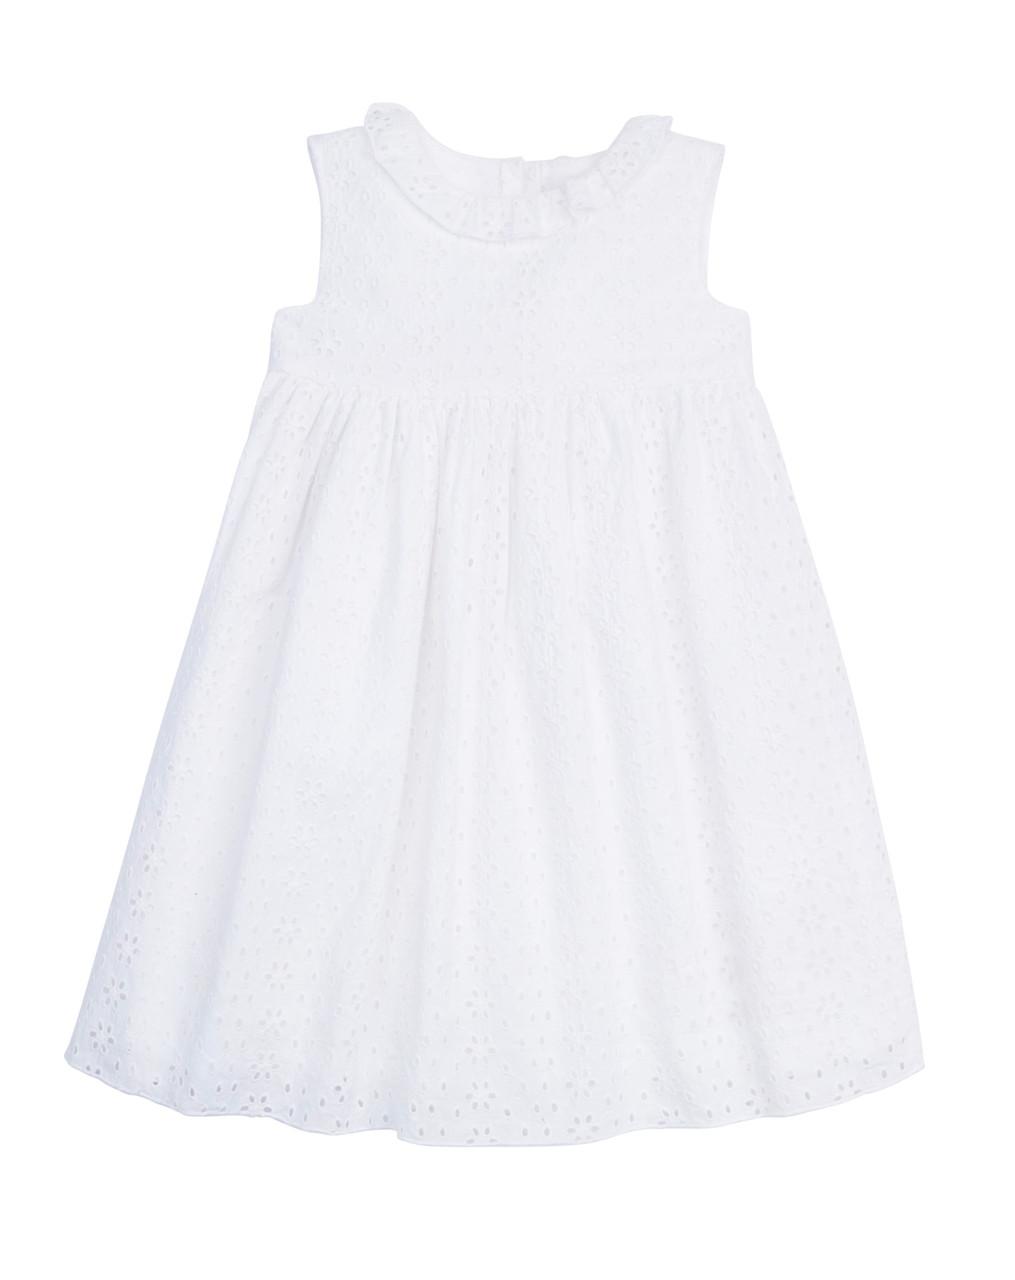 White Eyelet Annabel Dress - Monday's Child